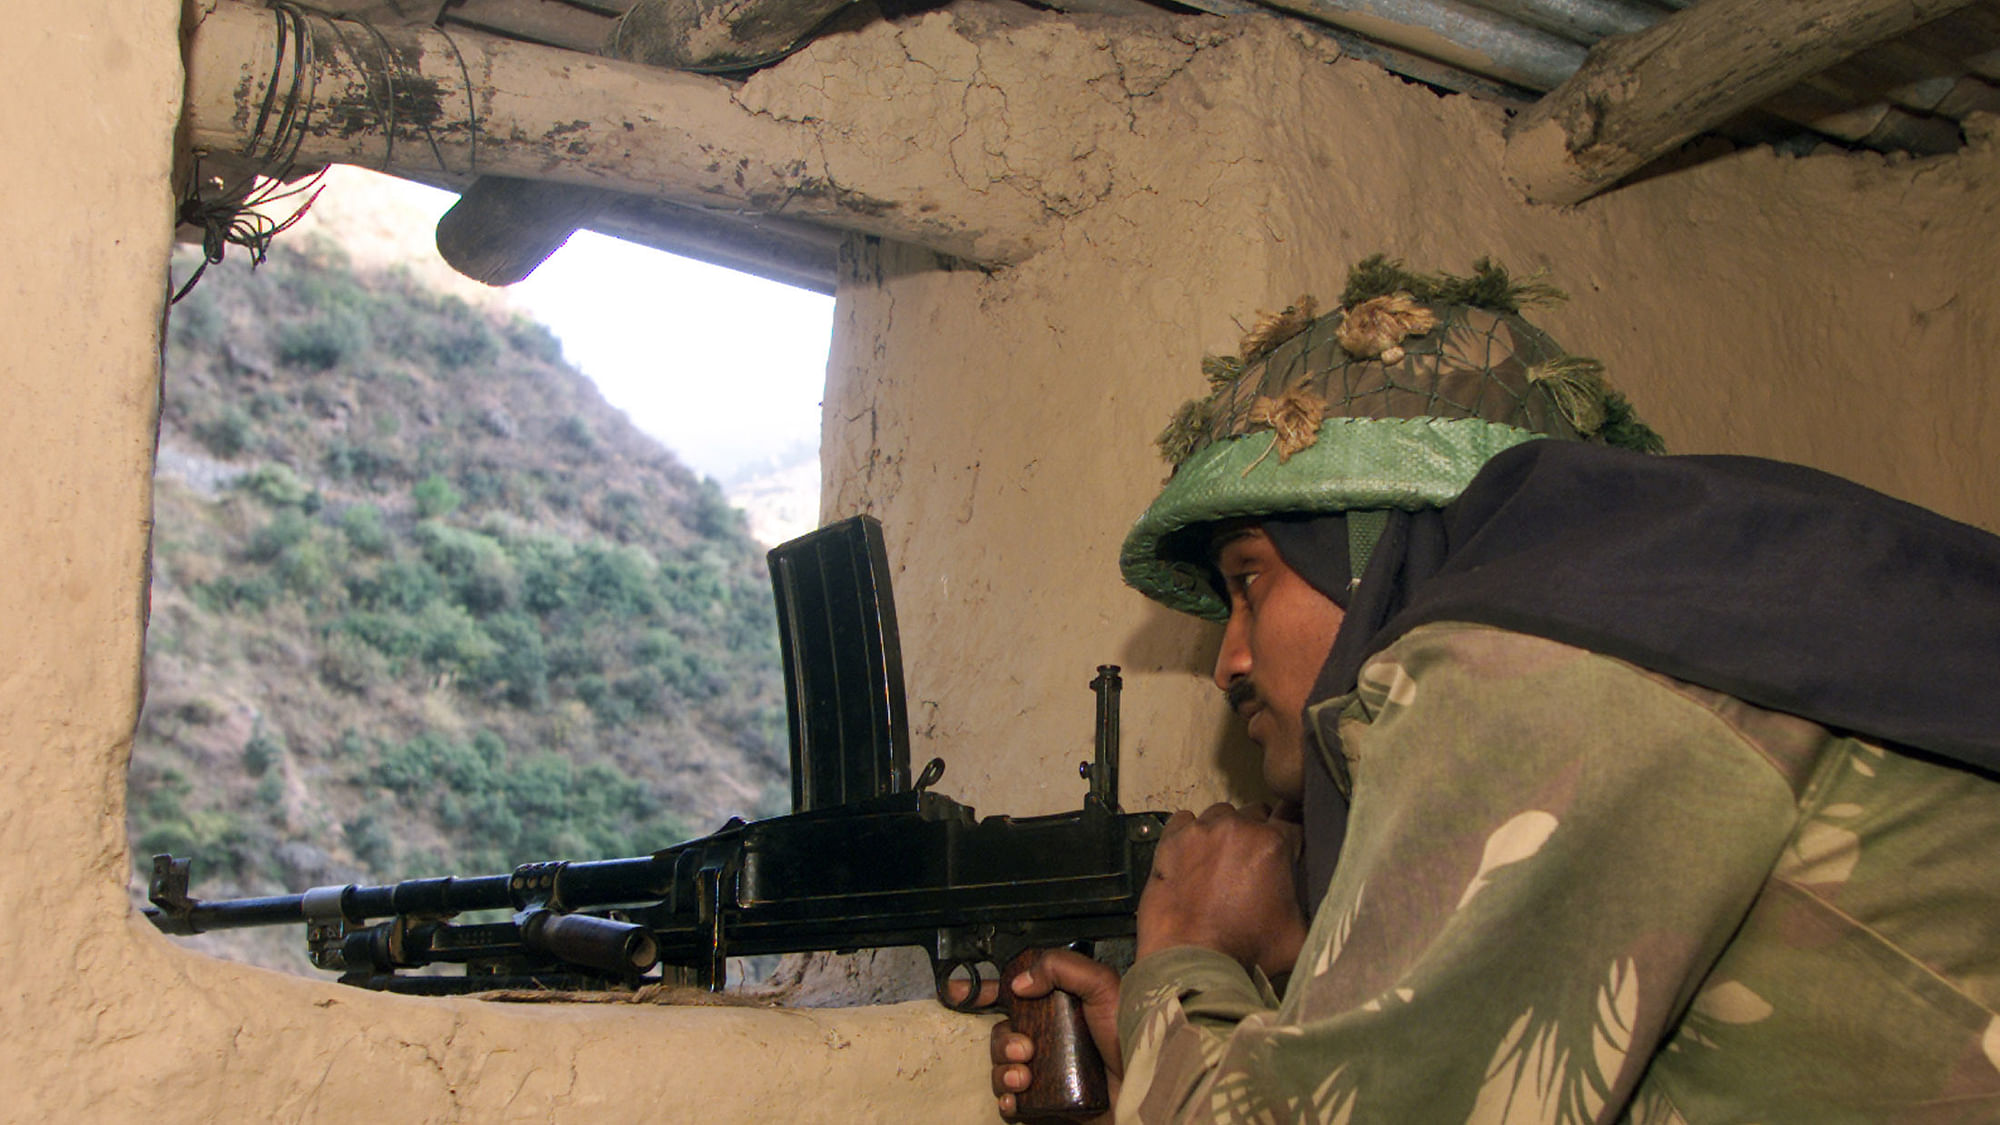 An Indian army soldier mans a gun inside his bunker in Kashmir. (Photo: Reuters)